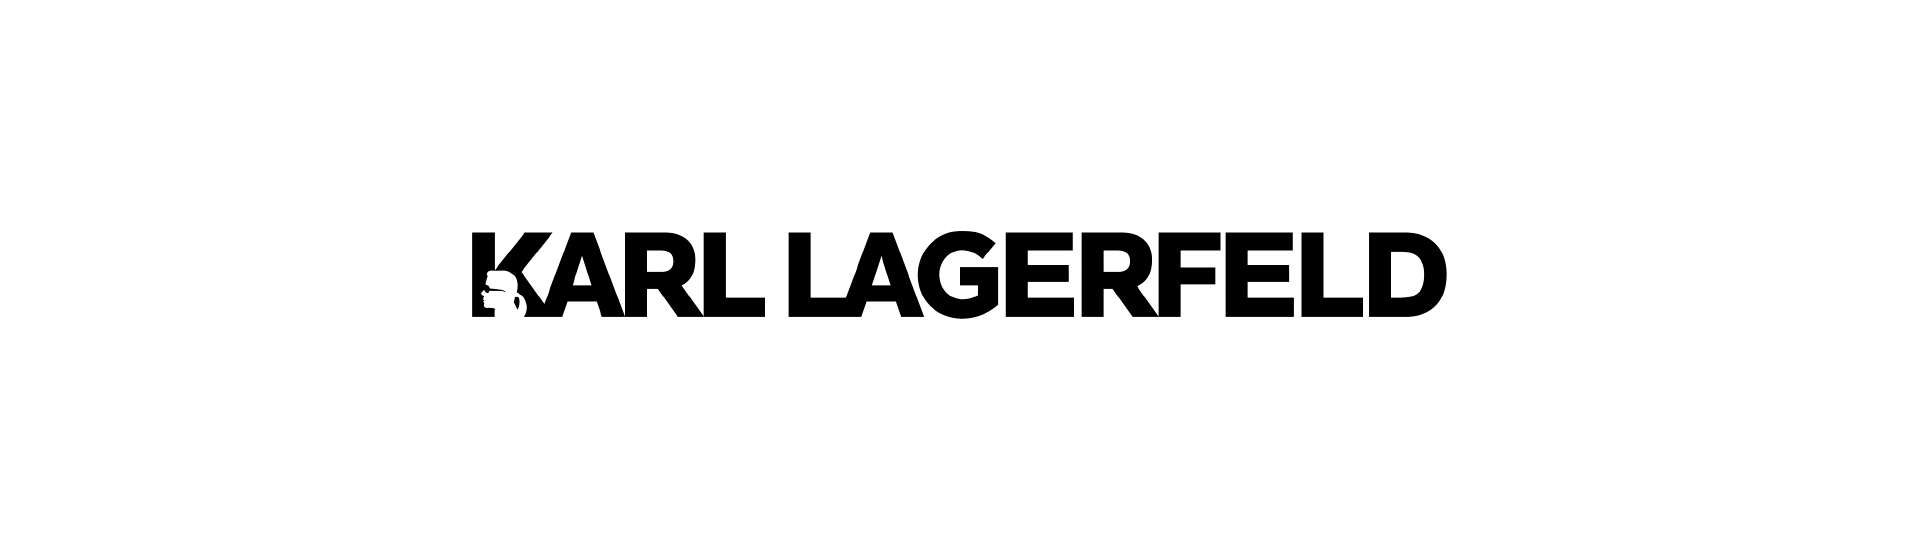 Karl Lagerfeld Fragrances